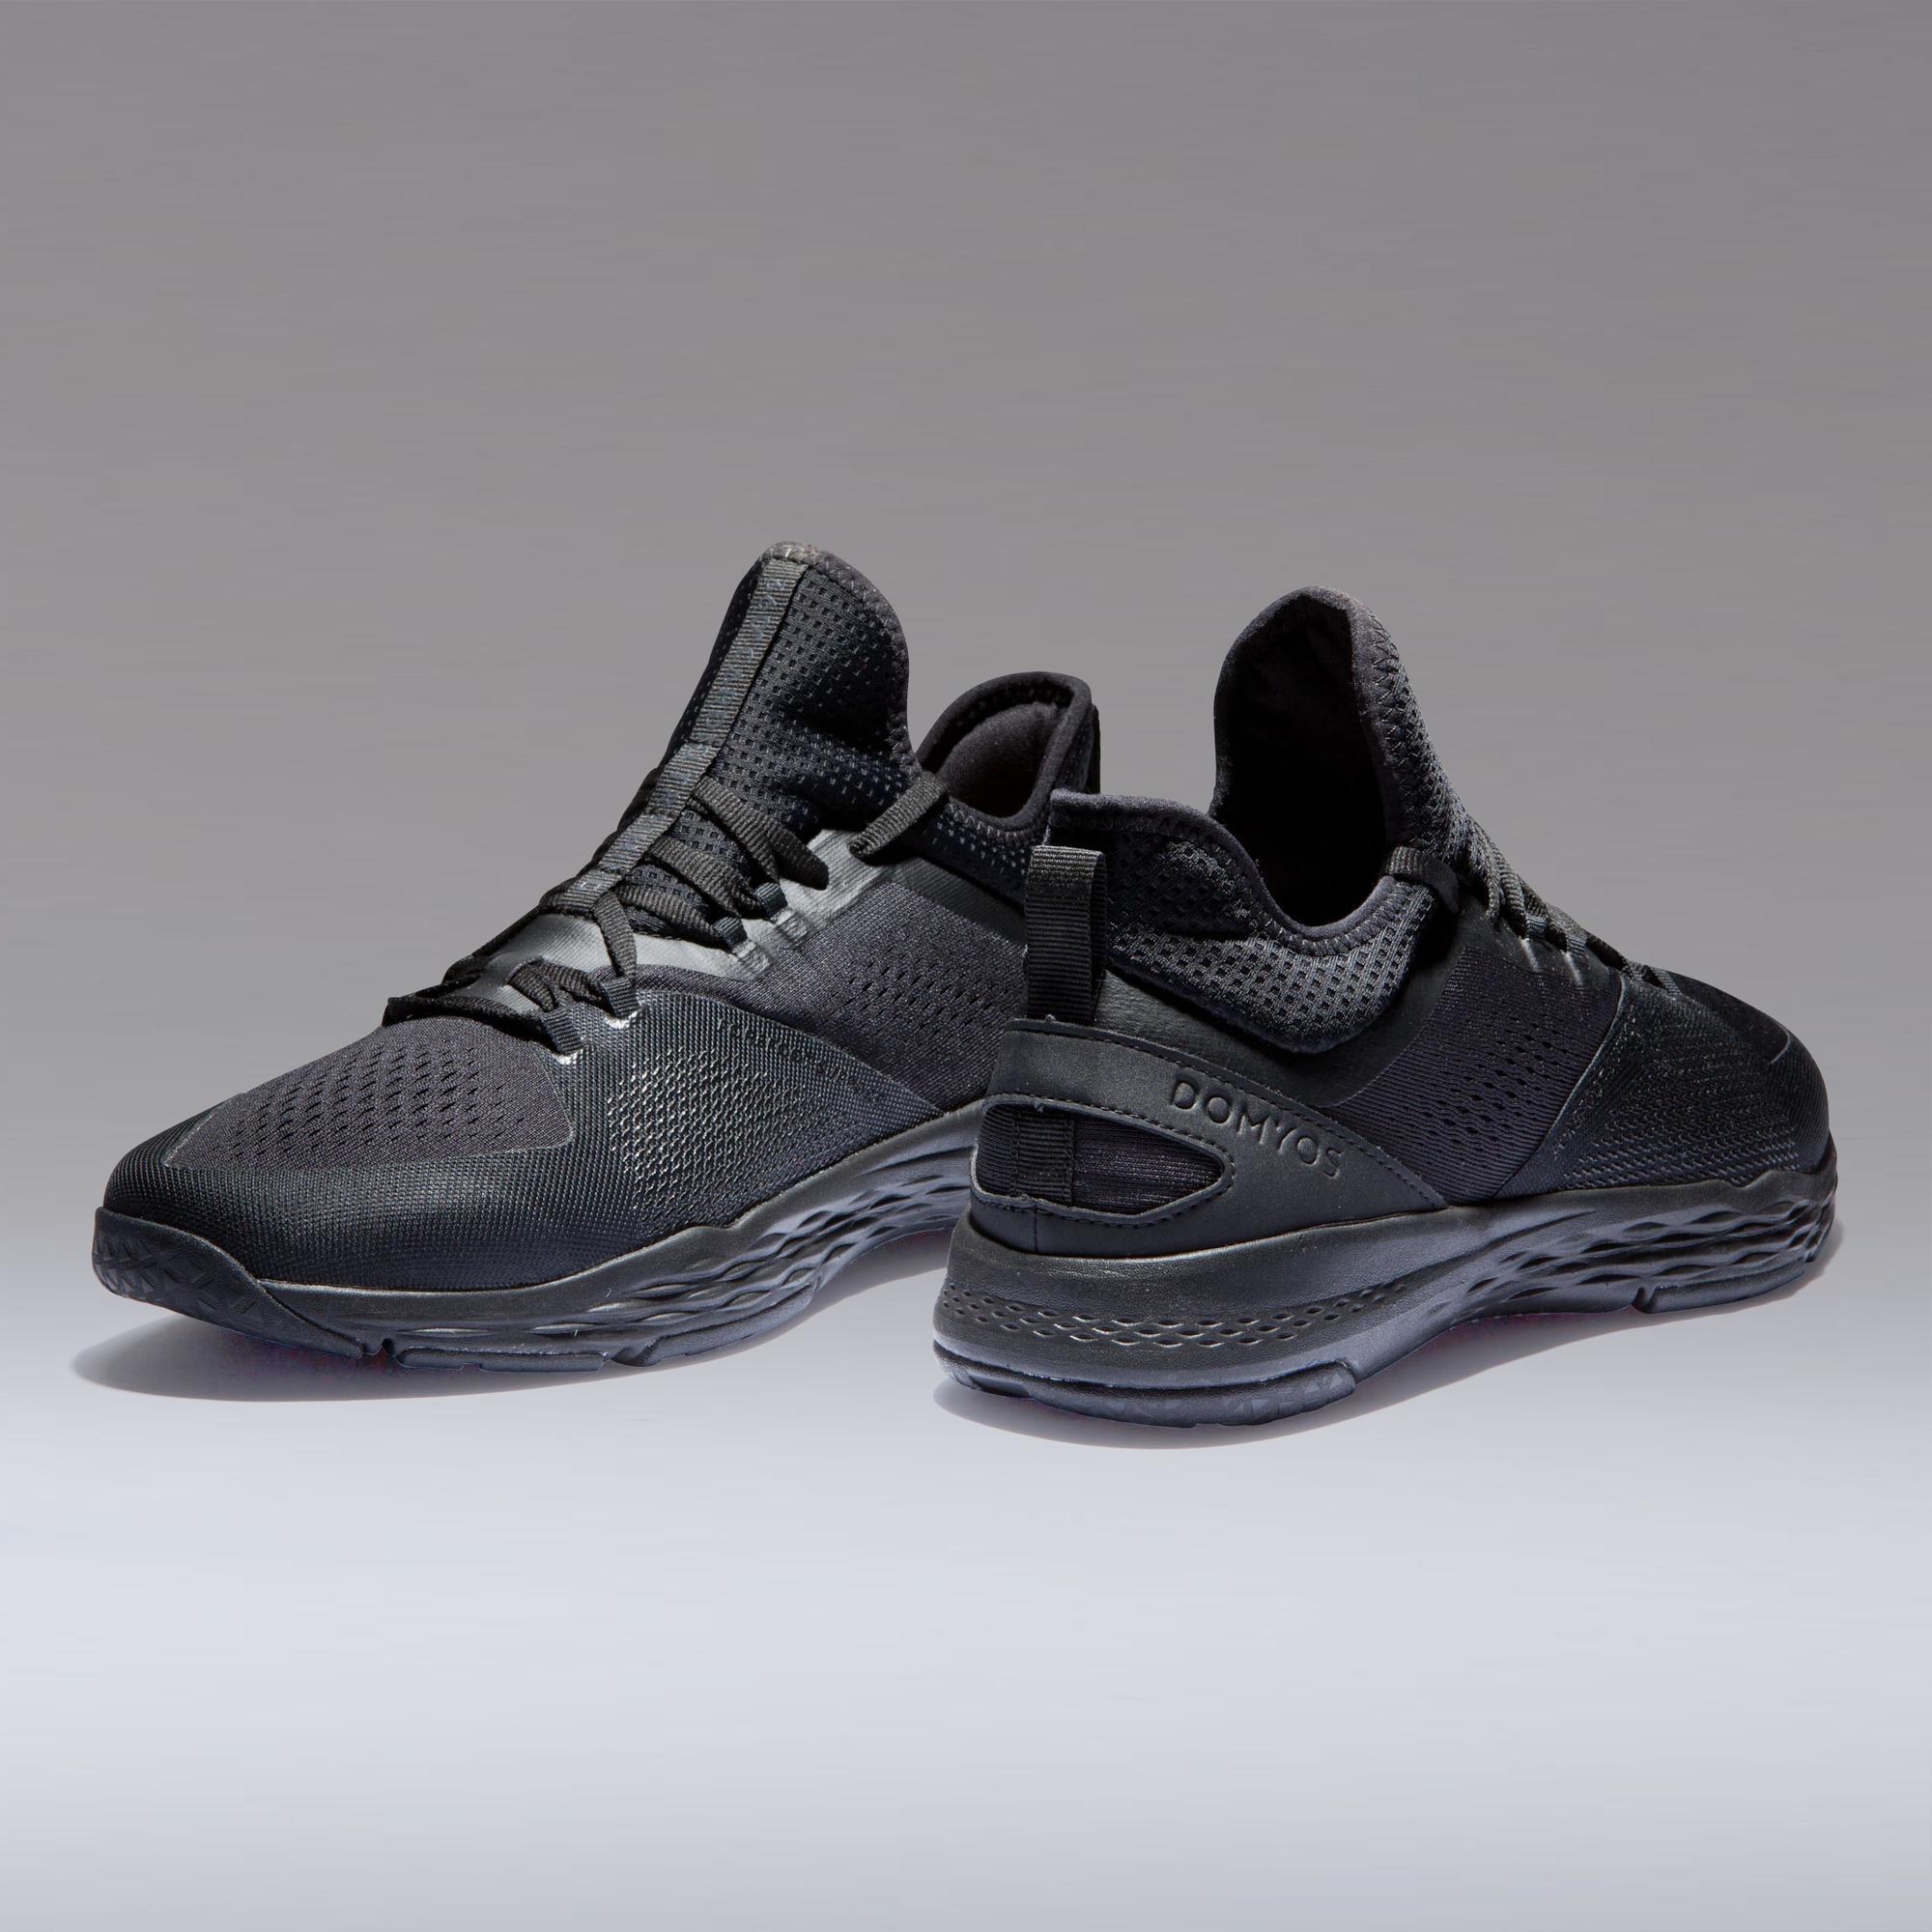 920 Mid Cardio Training Fitness Shoes - Black | Domyos by Decathlon